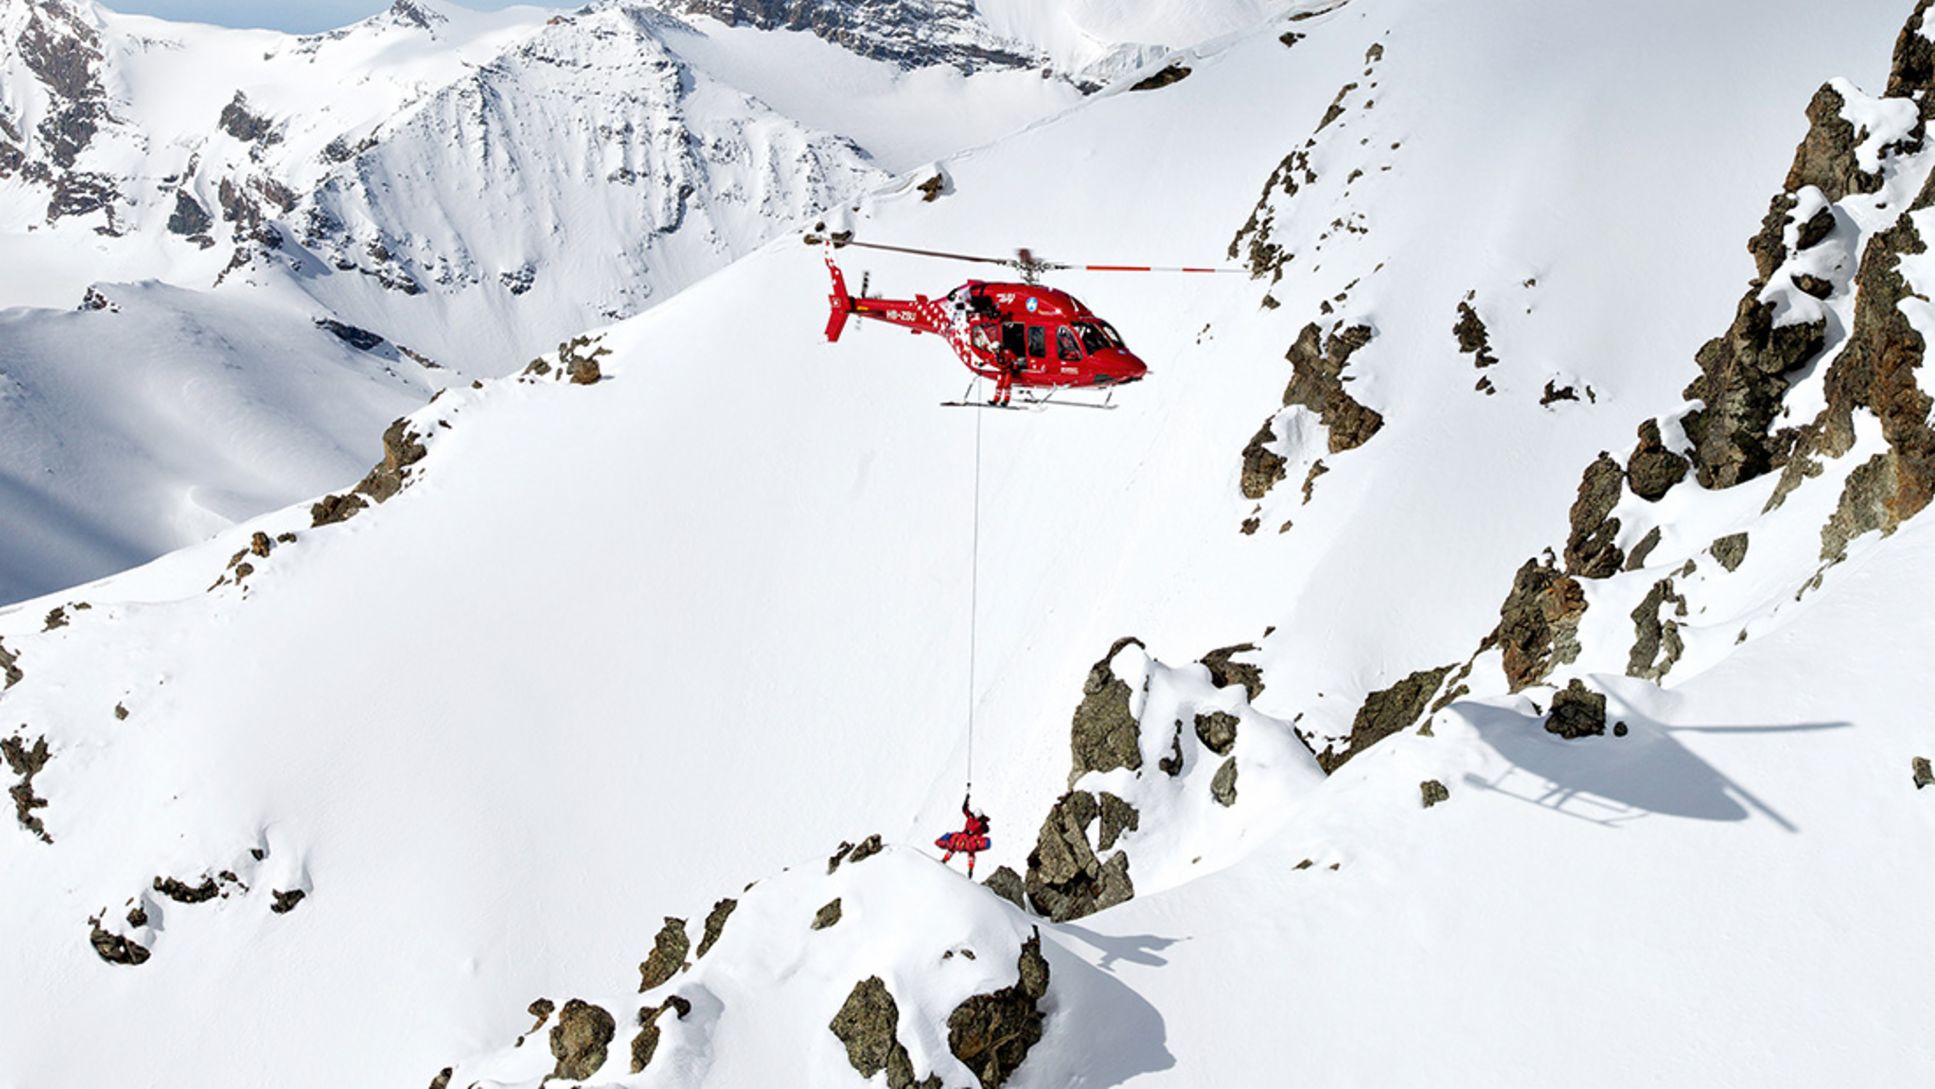 Air Zermatt's rescue helicopter at Swiss Matterhorn (Photo: Christoph Bauer)